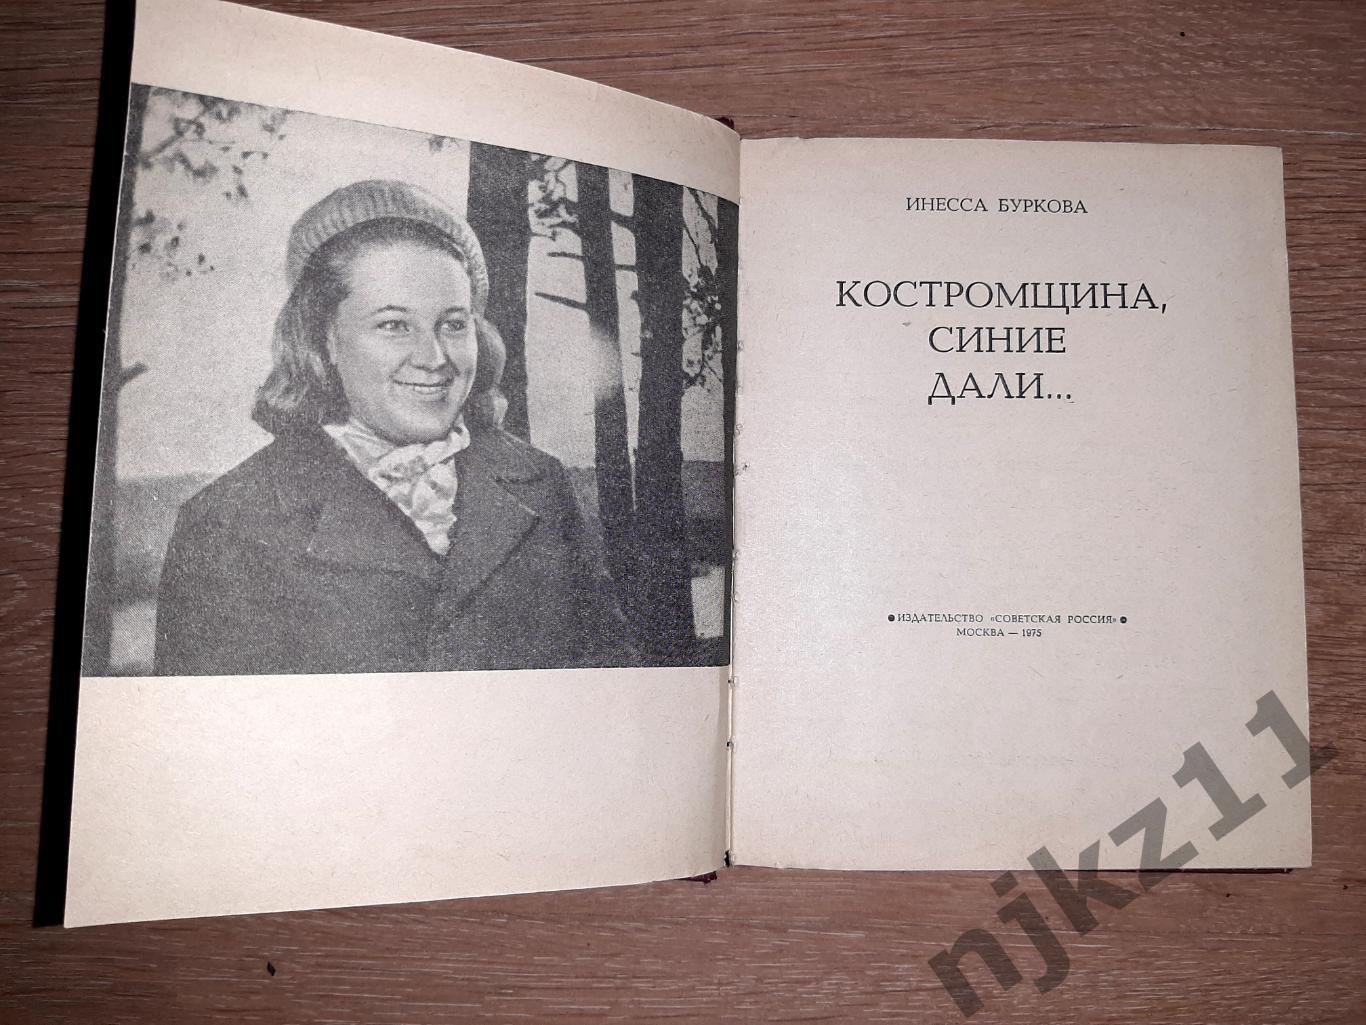 Буркова, Инесса Костромщина, синие дали 1975г КОСТРОМА 1